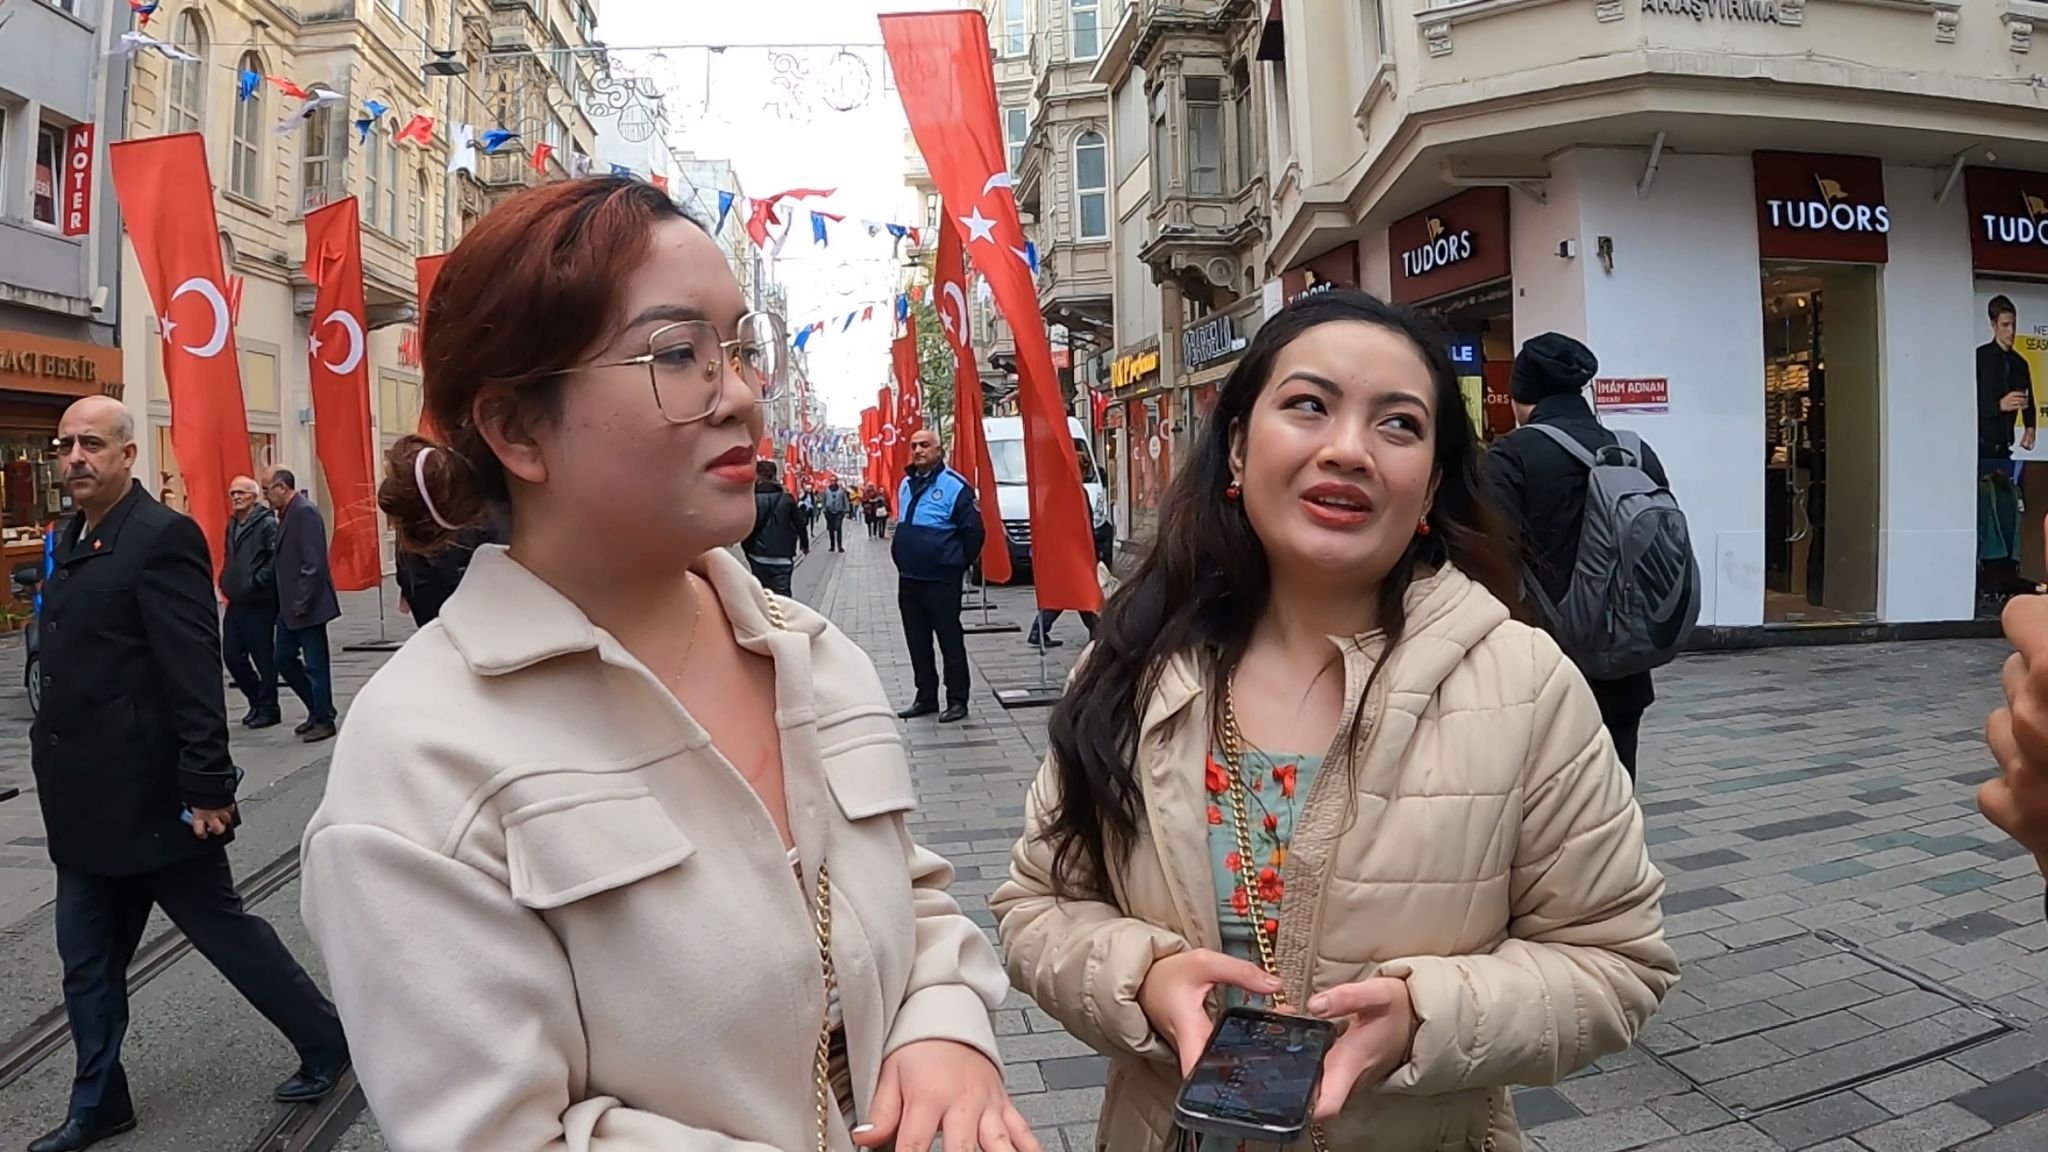 Filipino tourists Alissa and Angelica Marquez speak in an interview, on Istiklal Street, in Istanbul, Türkiye, Nov. 16, 2022. (PHOTO BY BULUT YAMANDAĞ)